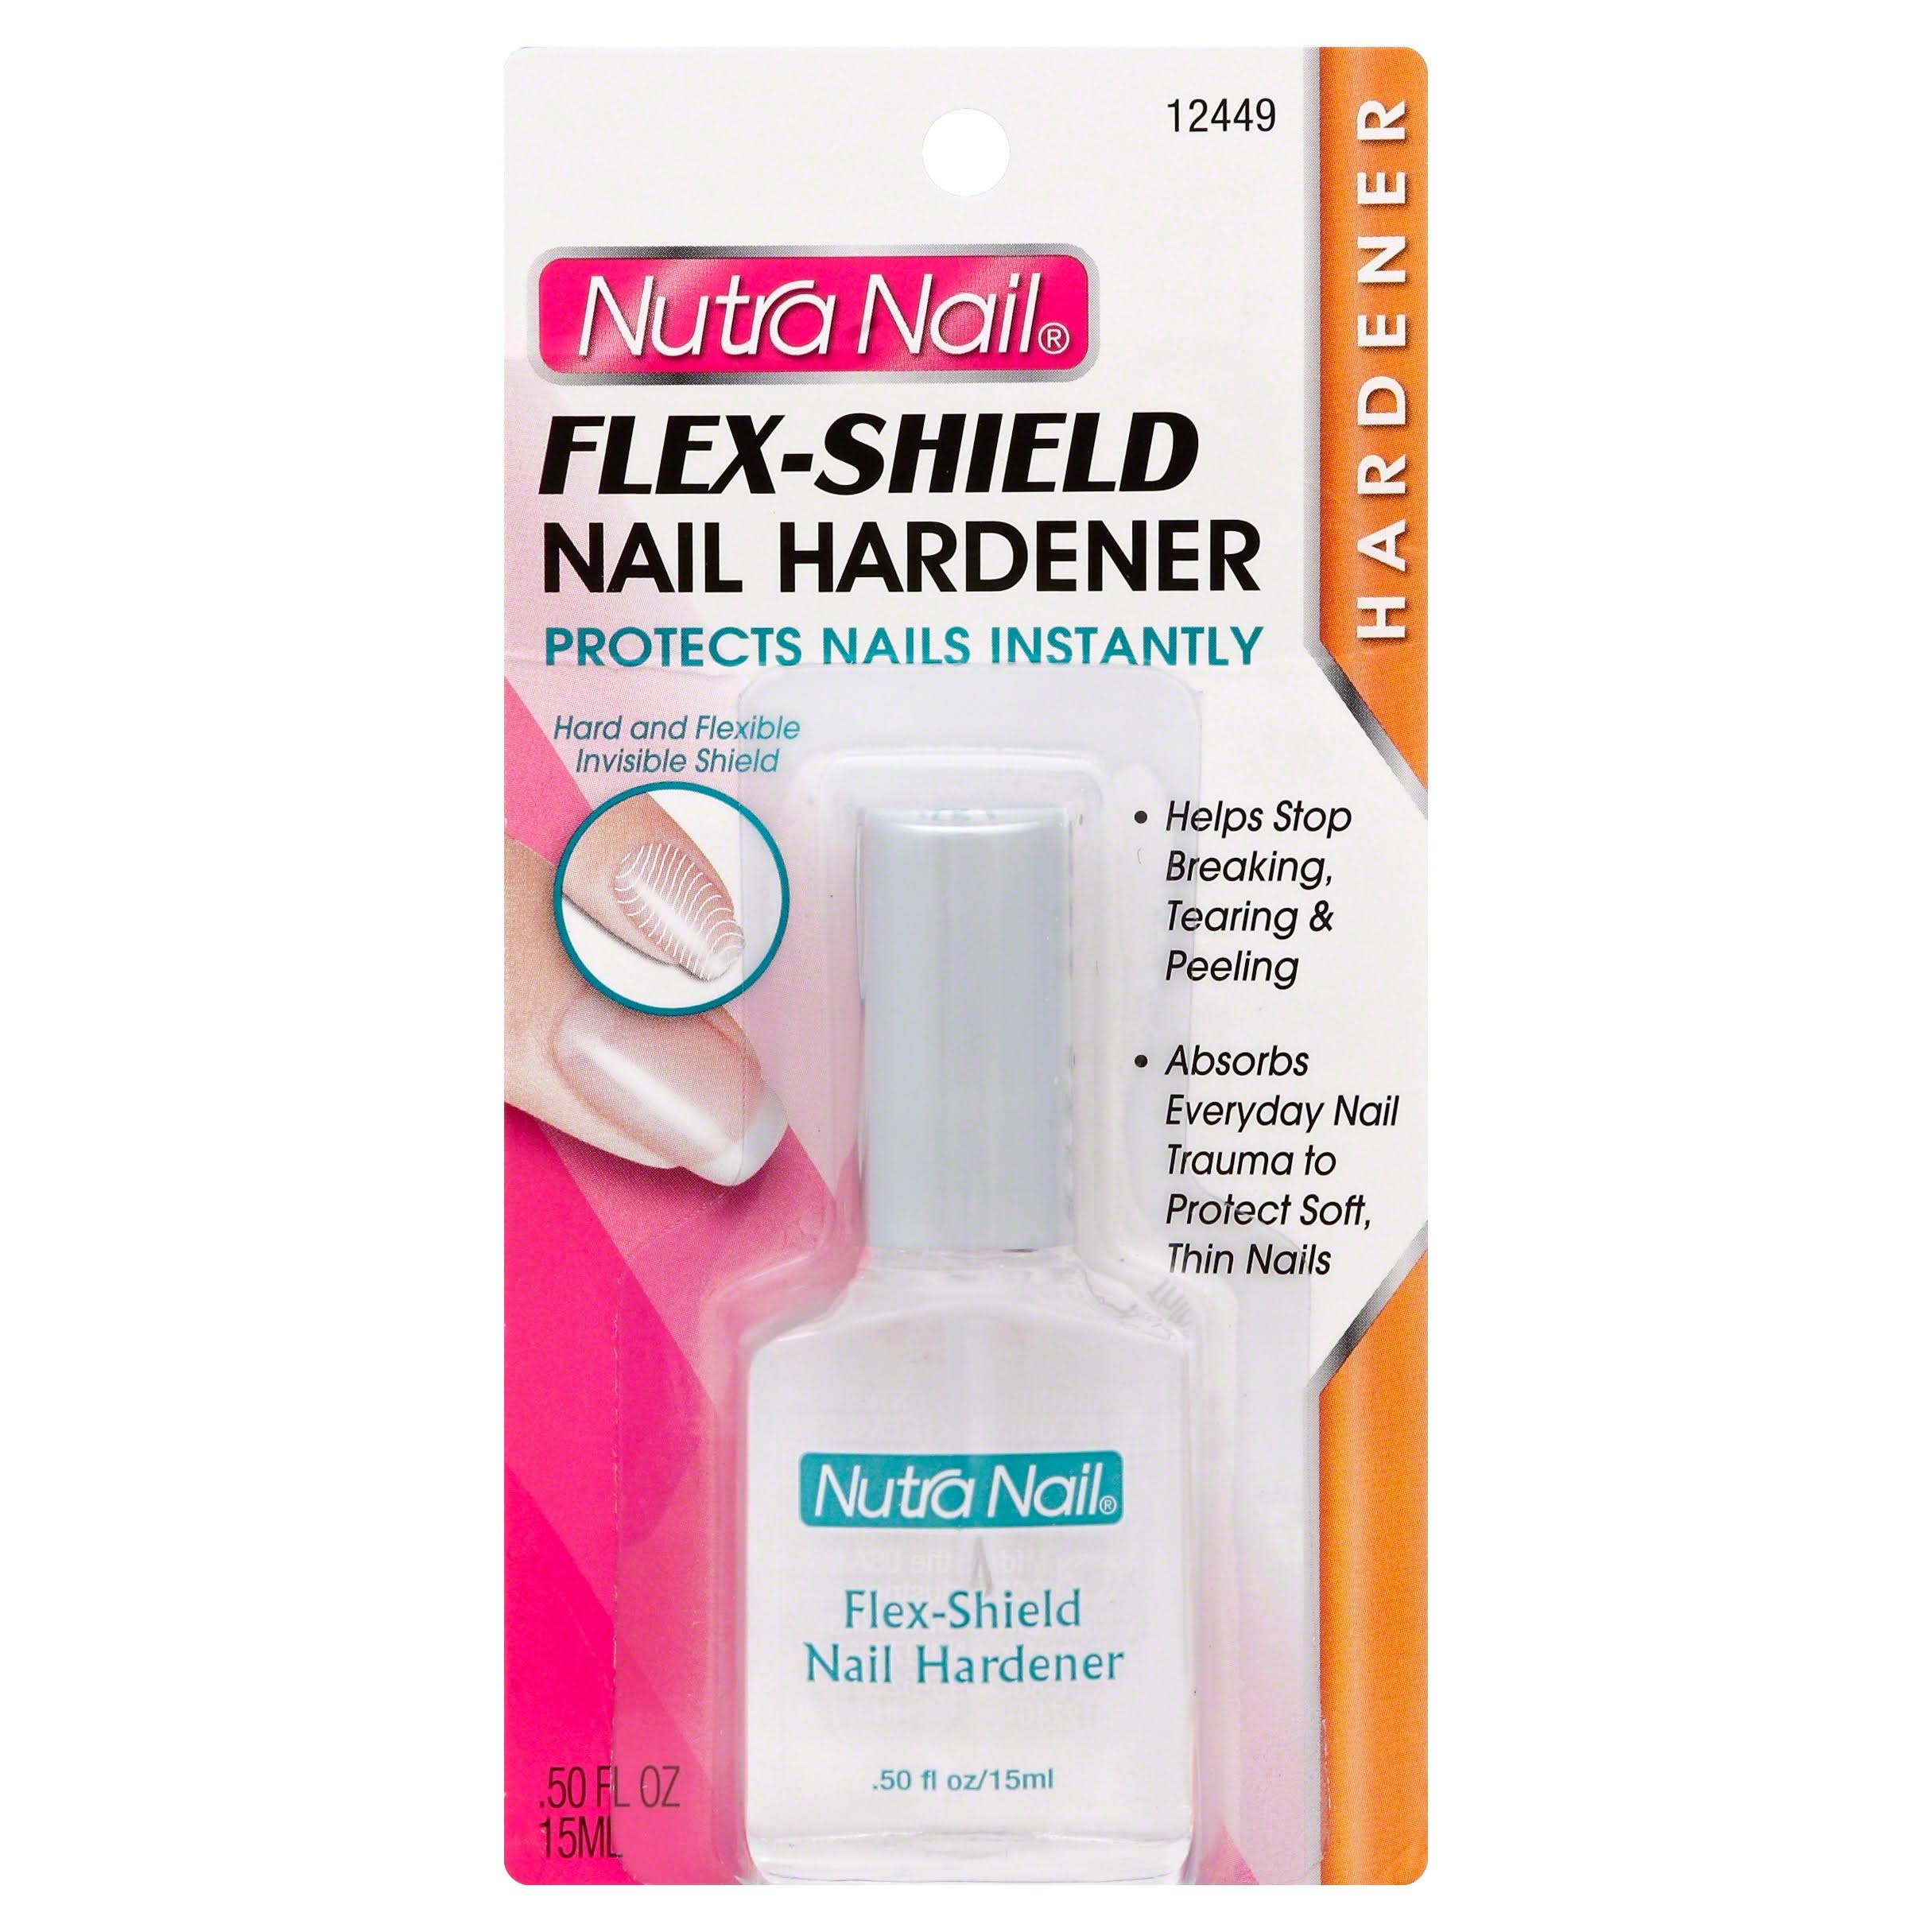 Nutra Nail Nail Hardener, Flex-Shield - 0.5 fl oz